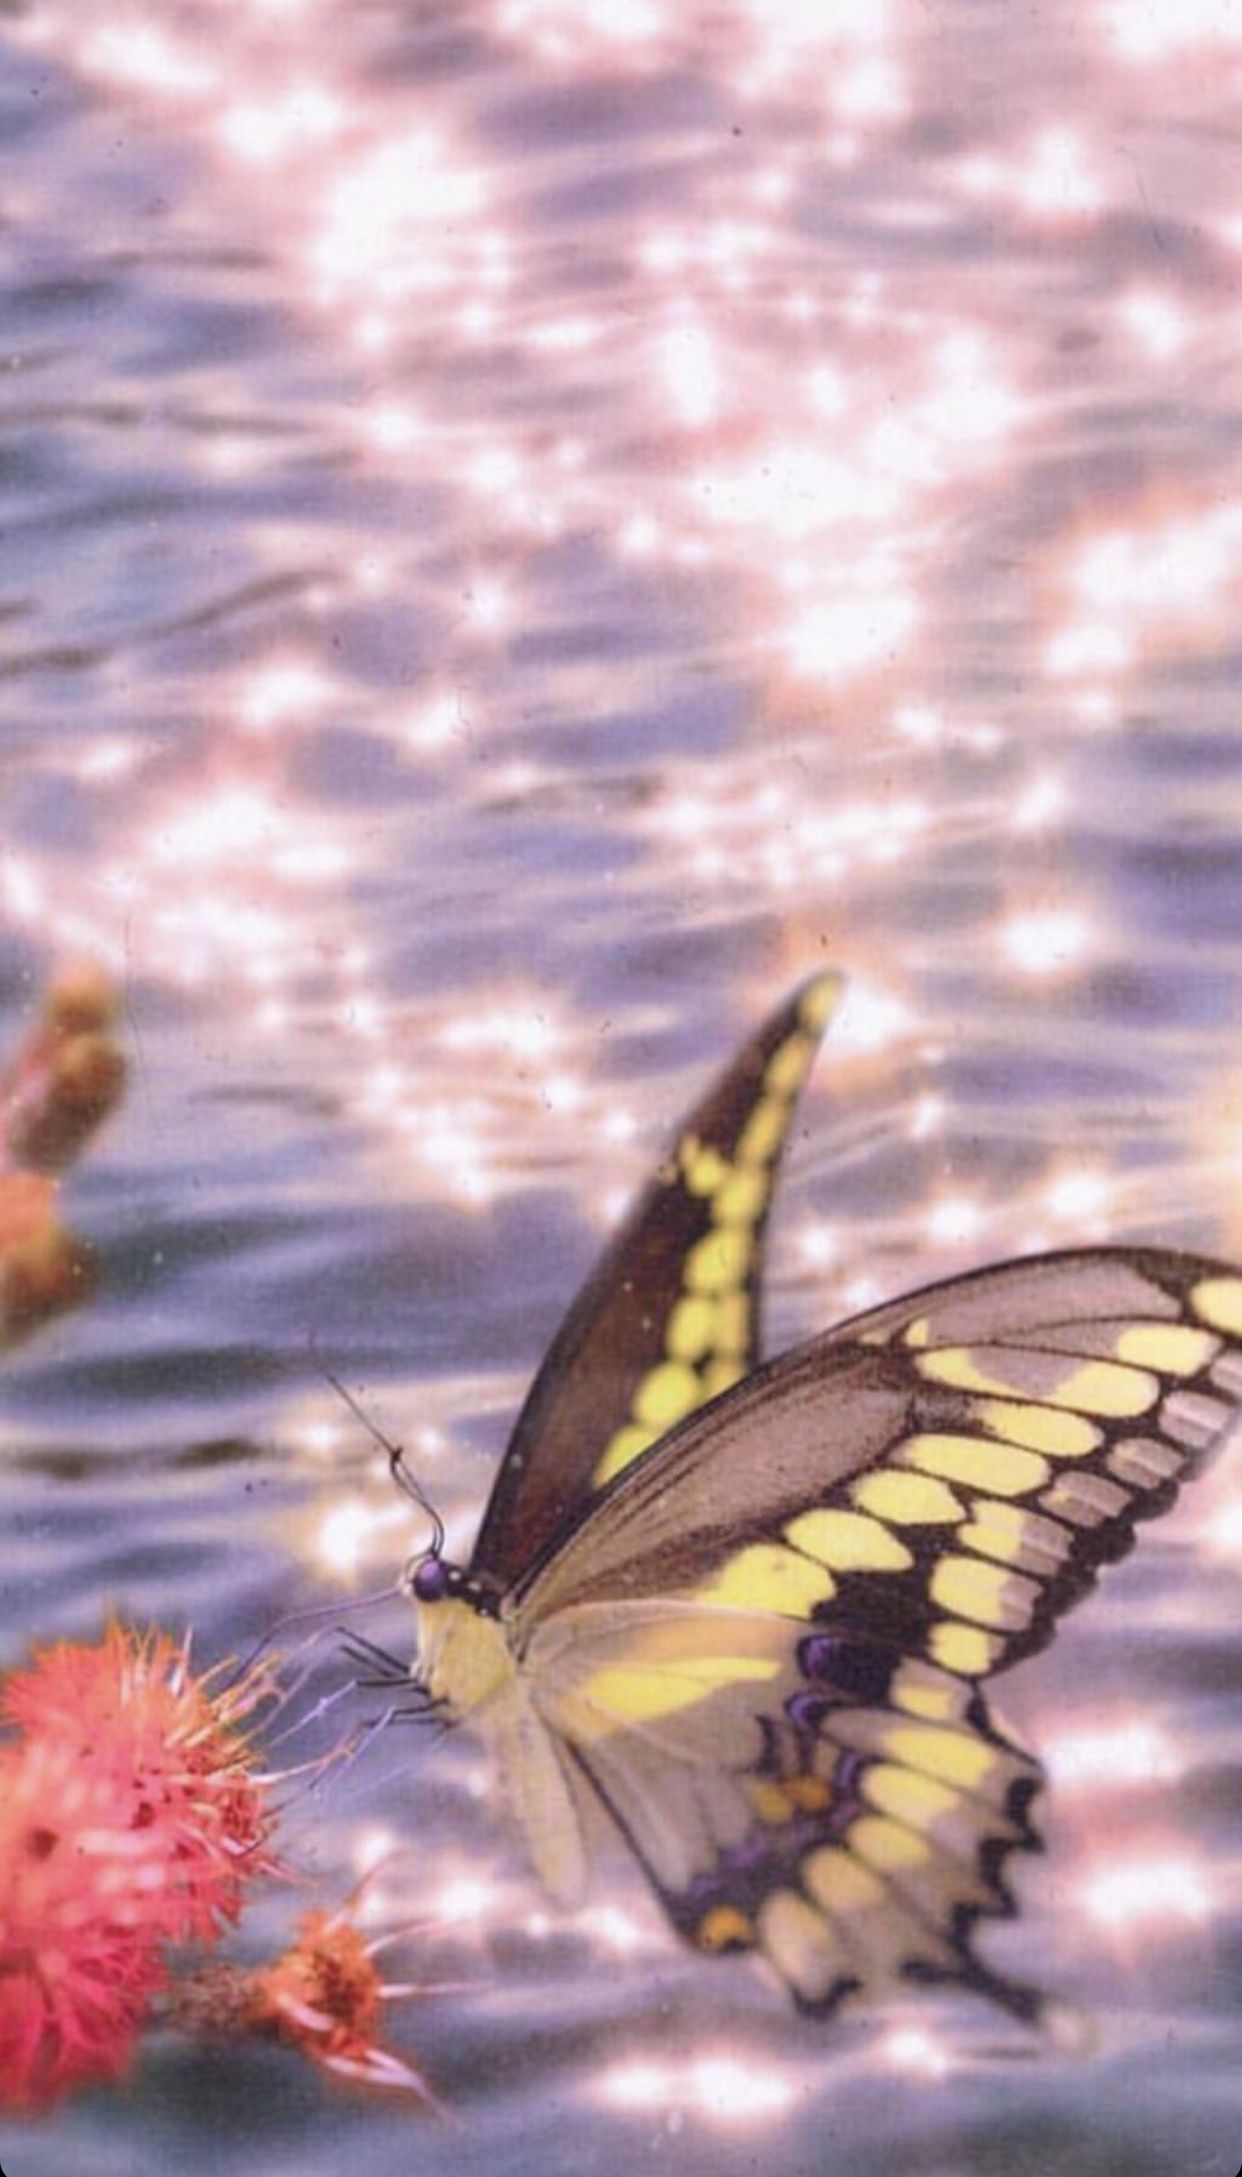 Artsy Aesthetic Butterfly Wallpaper Sparkle - Eradetontos